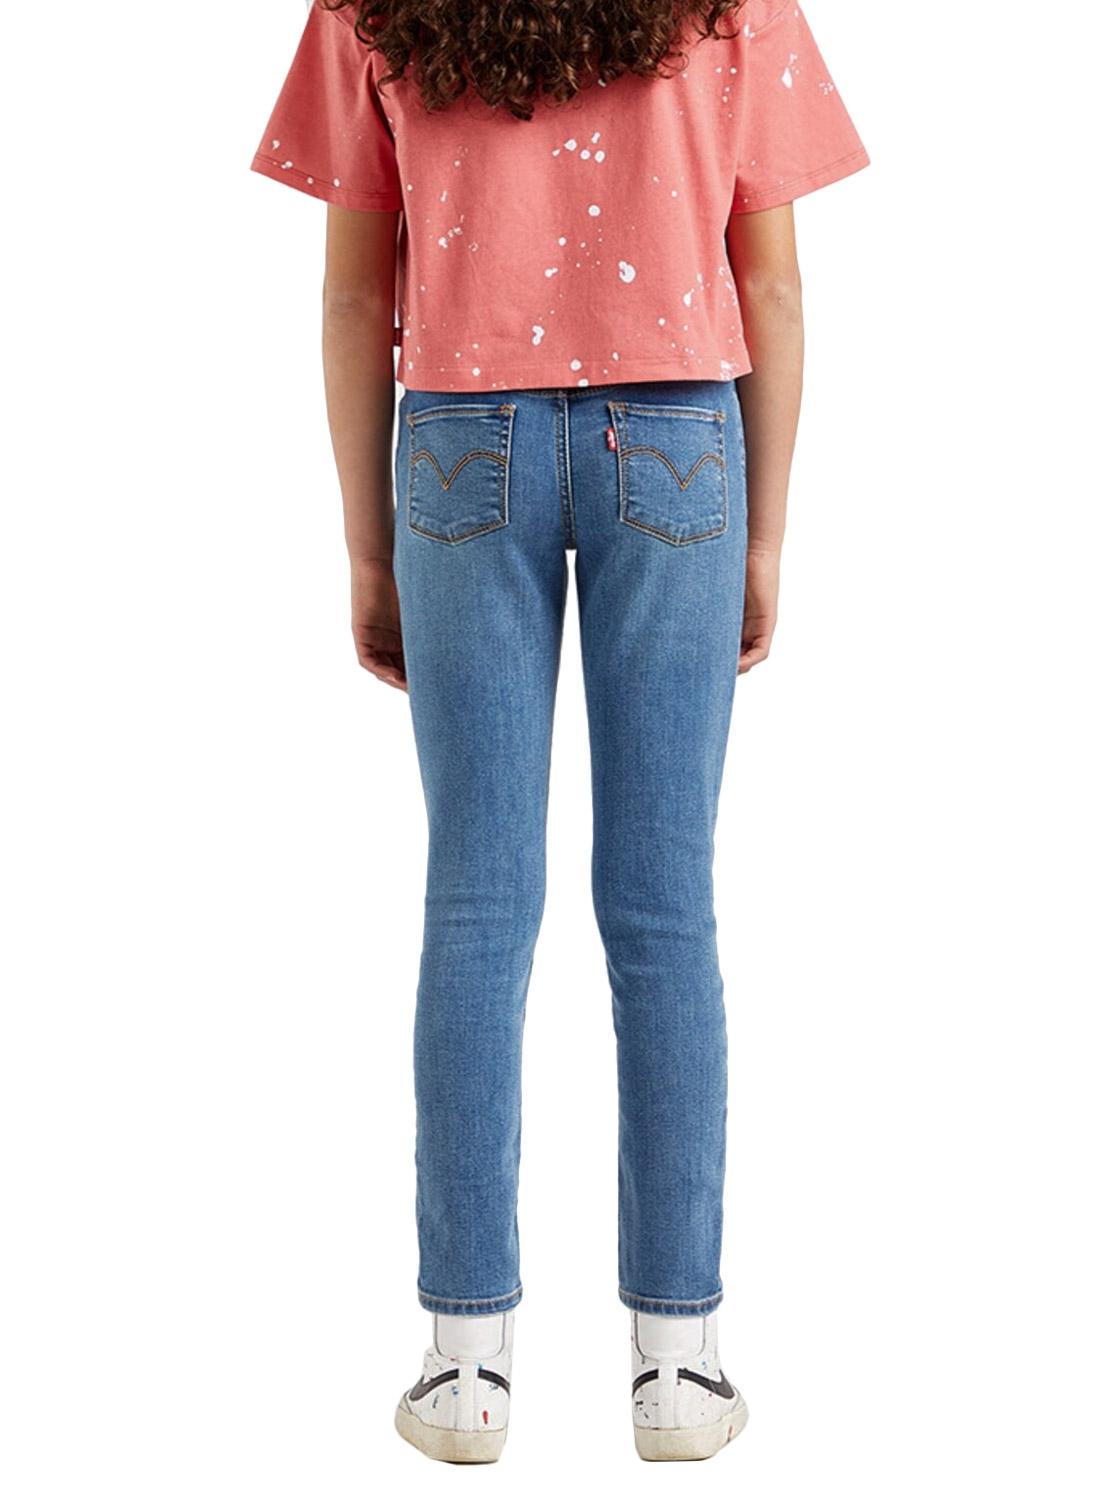 Pantaloni Jeans Levis 710 Super Skinny Blu Bambina